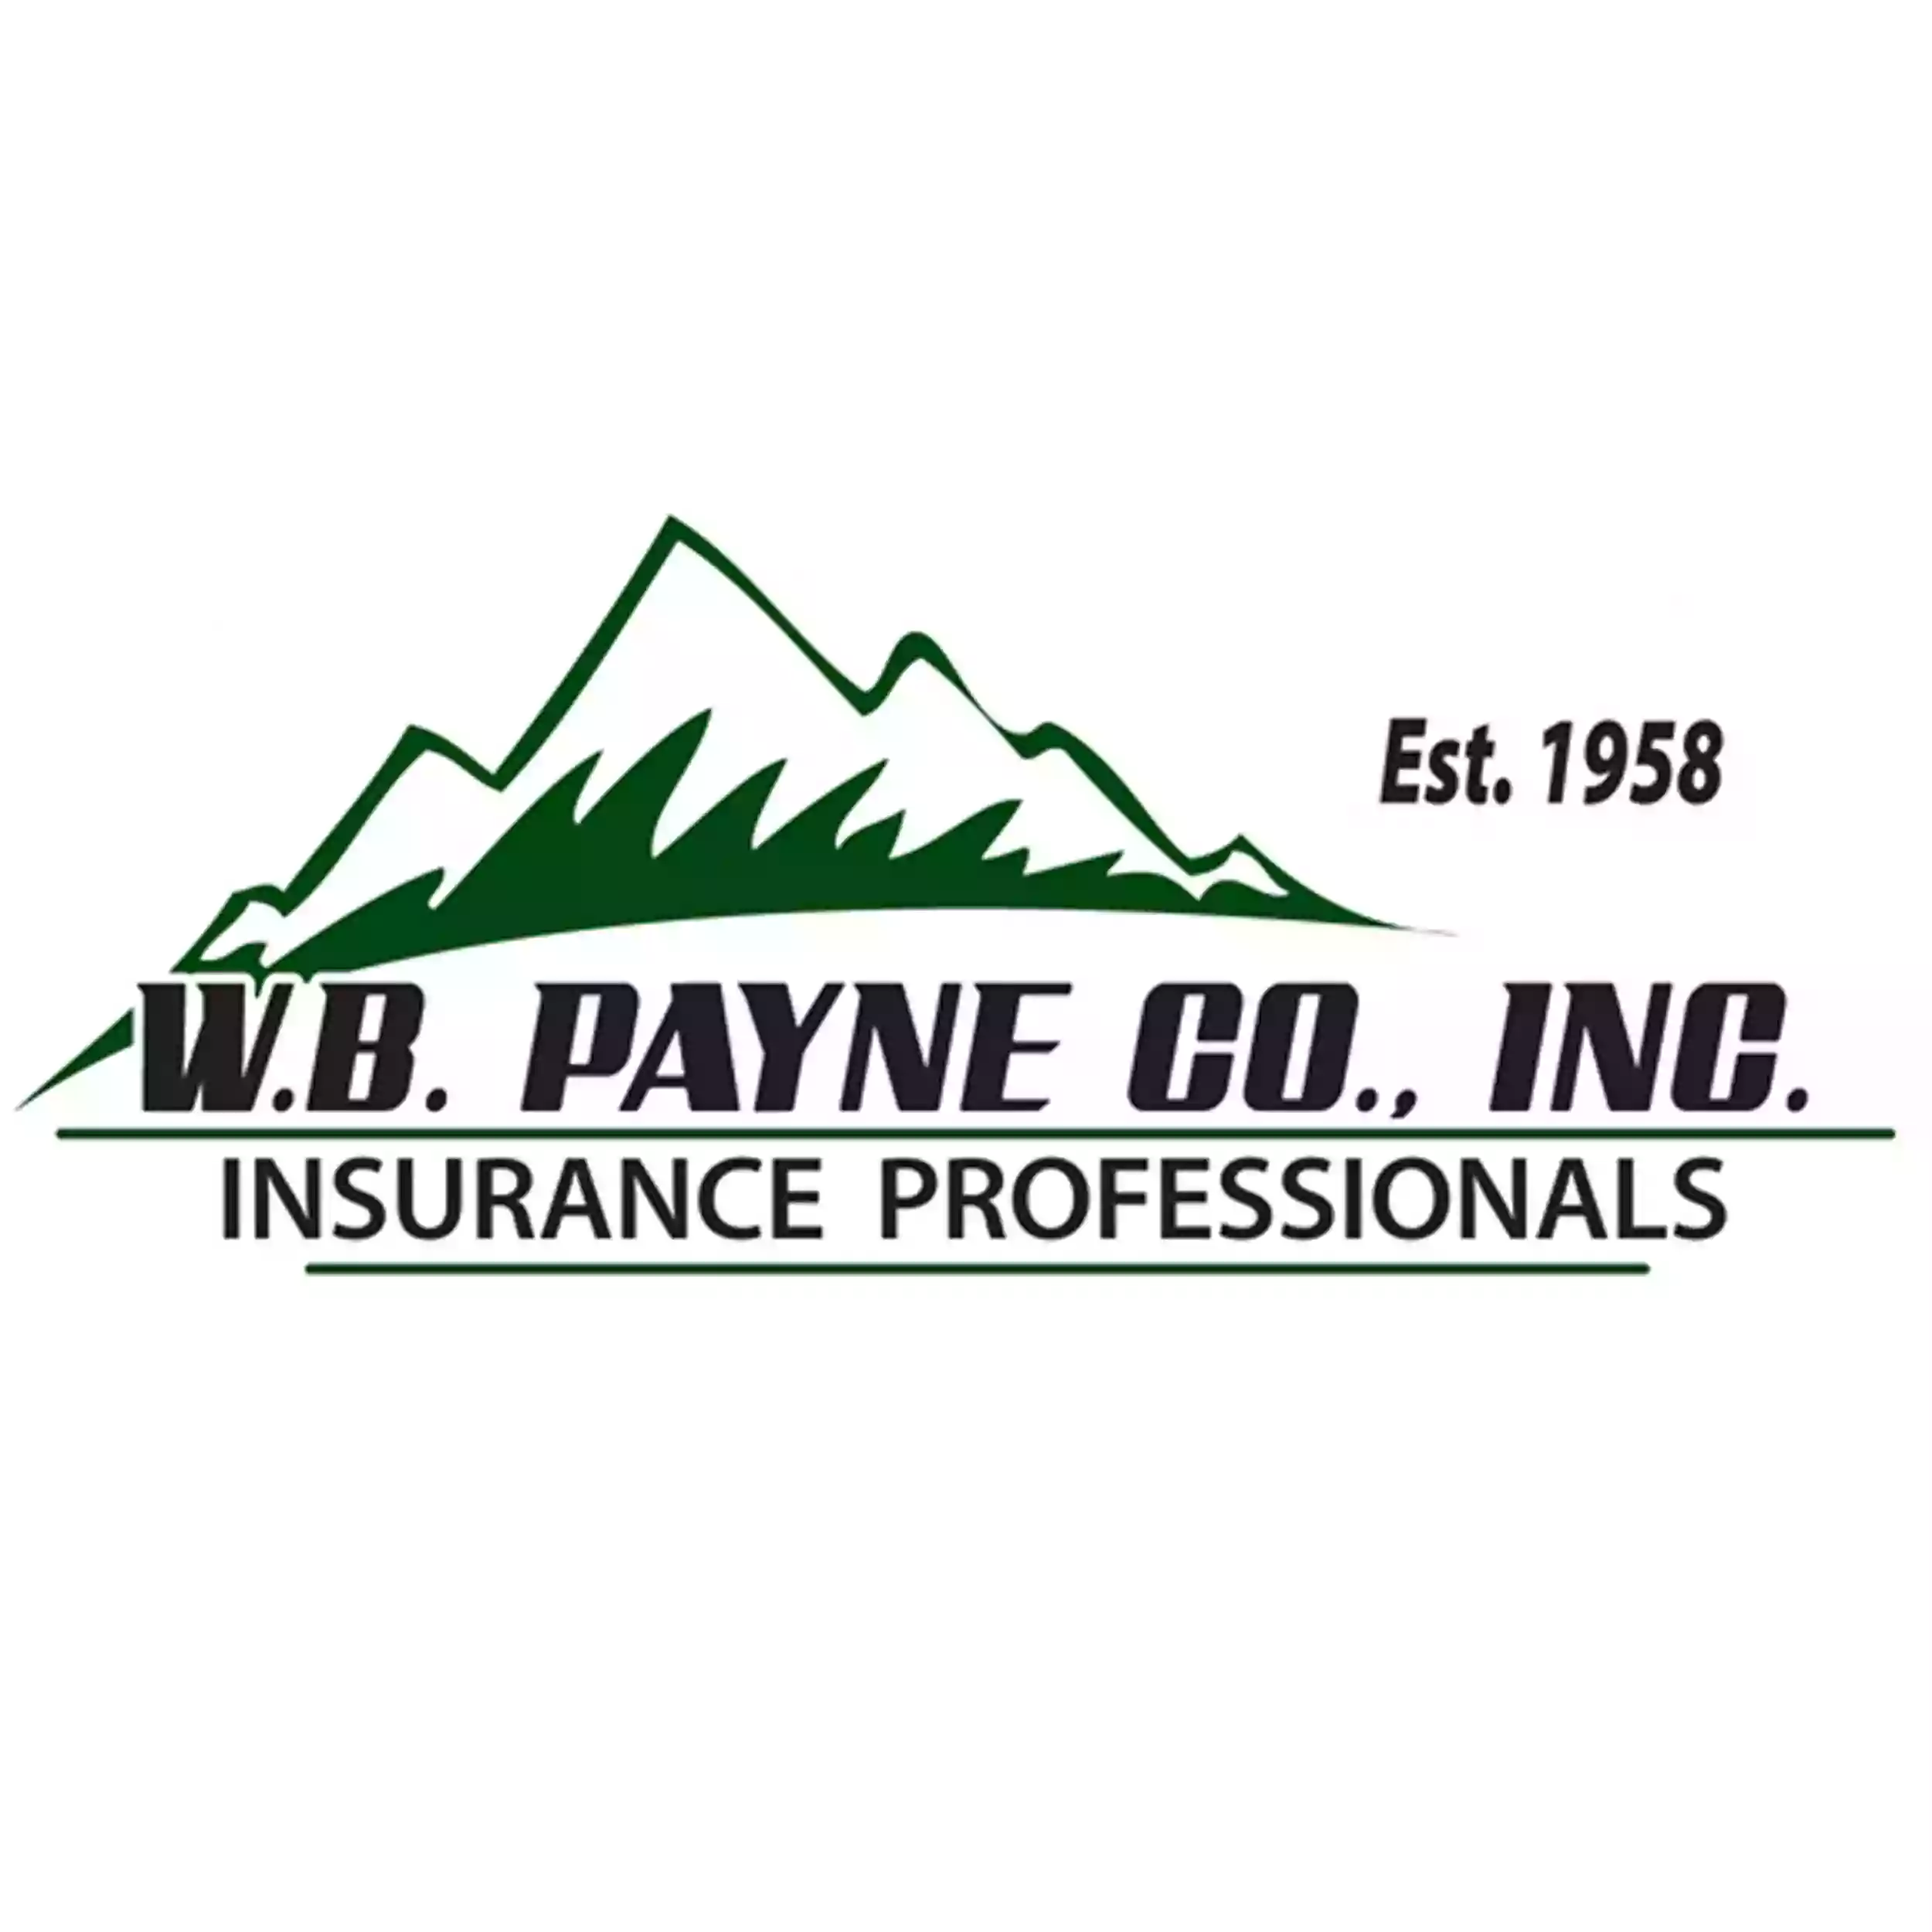 W.B. Payne Co., Inc. Insurance Professionals